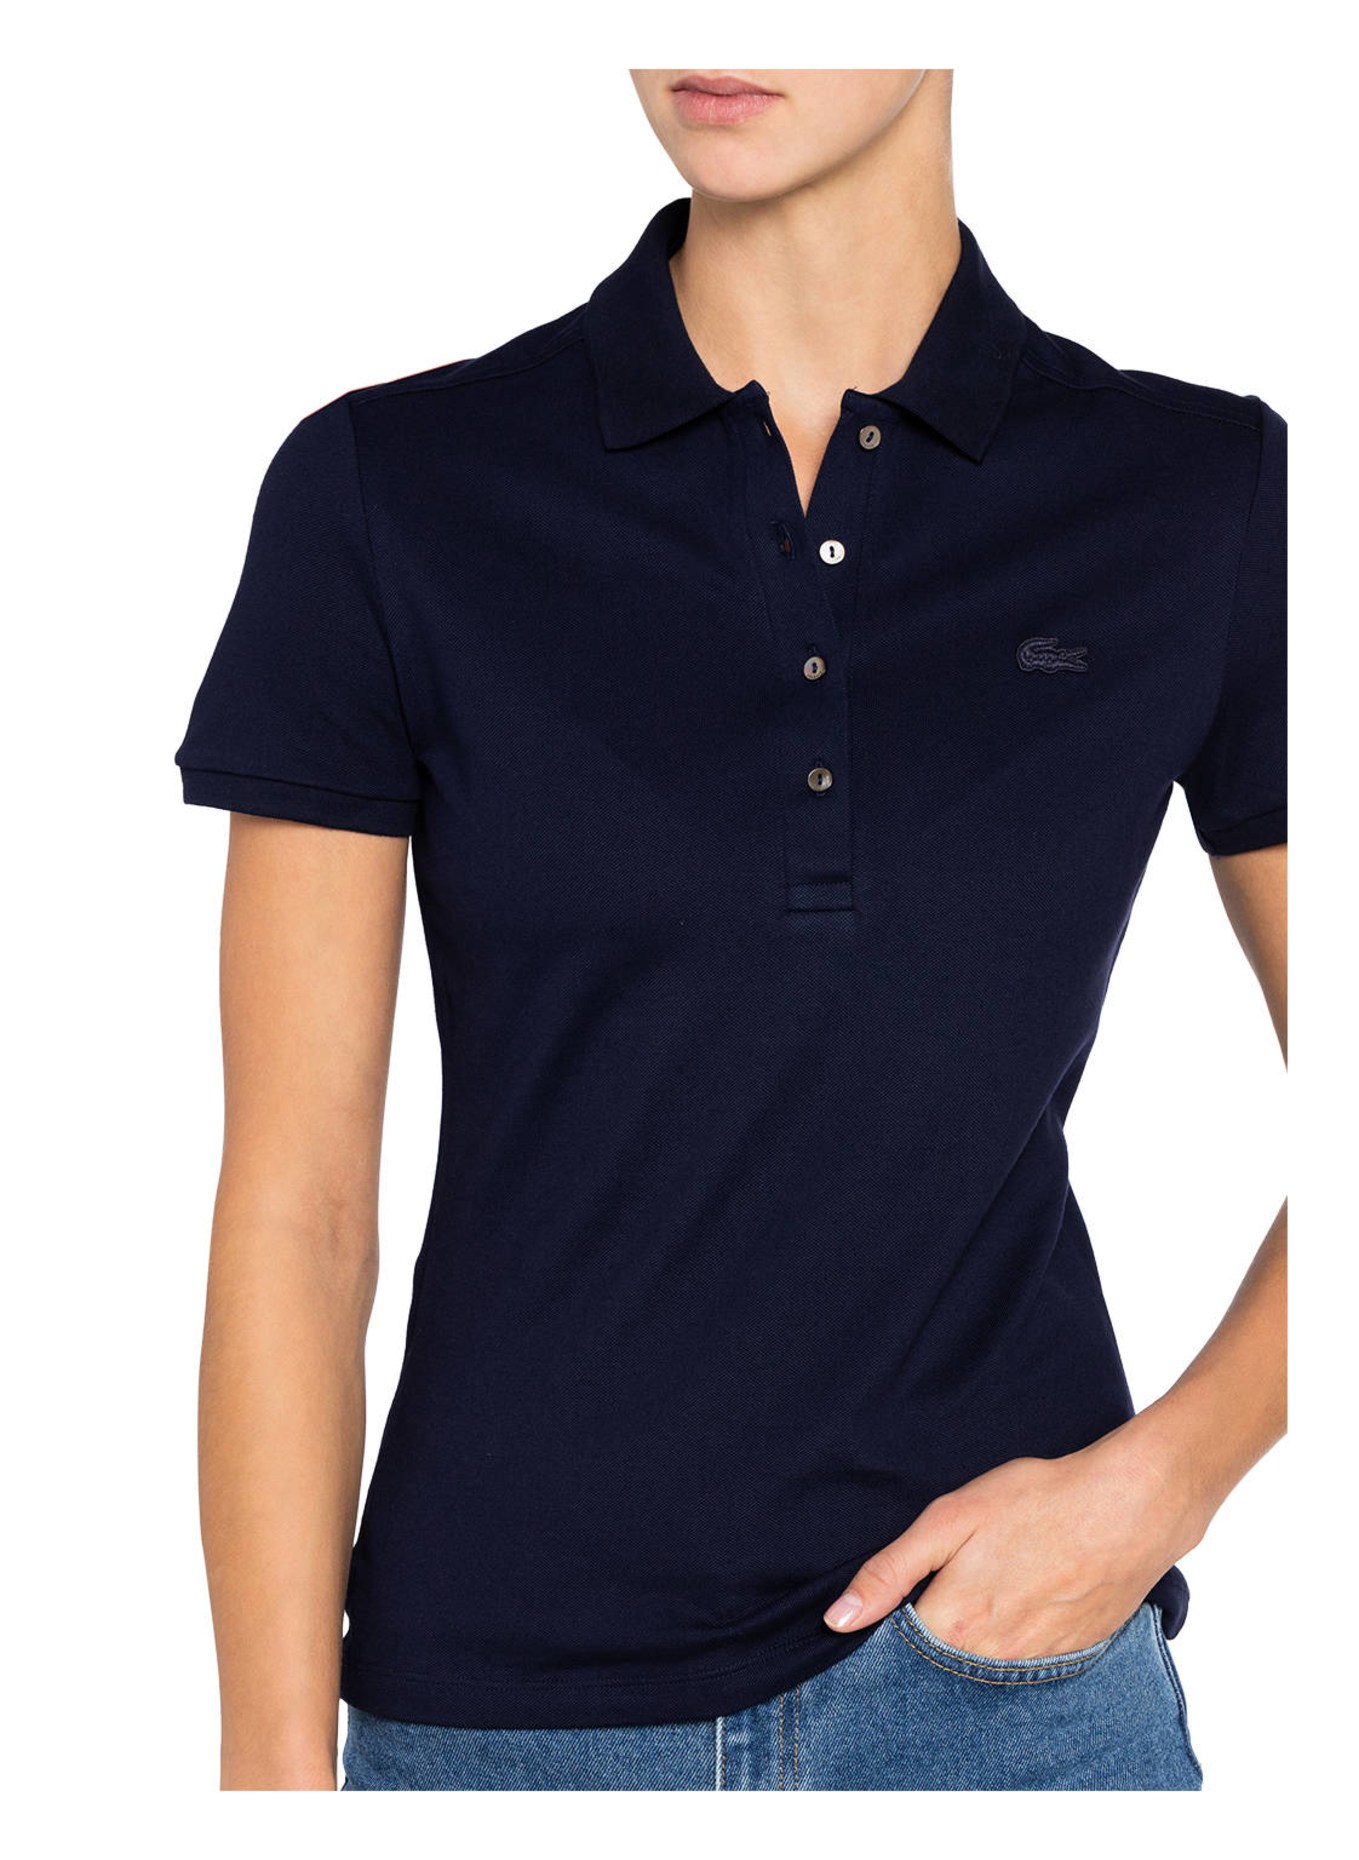 LACOSTE Piqué-Poloshirt Slim Fit, Farbe: NAVY (Bild 4)